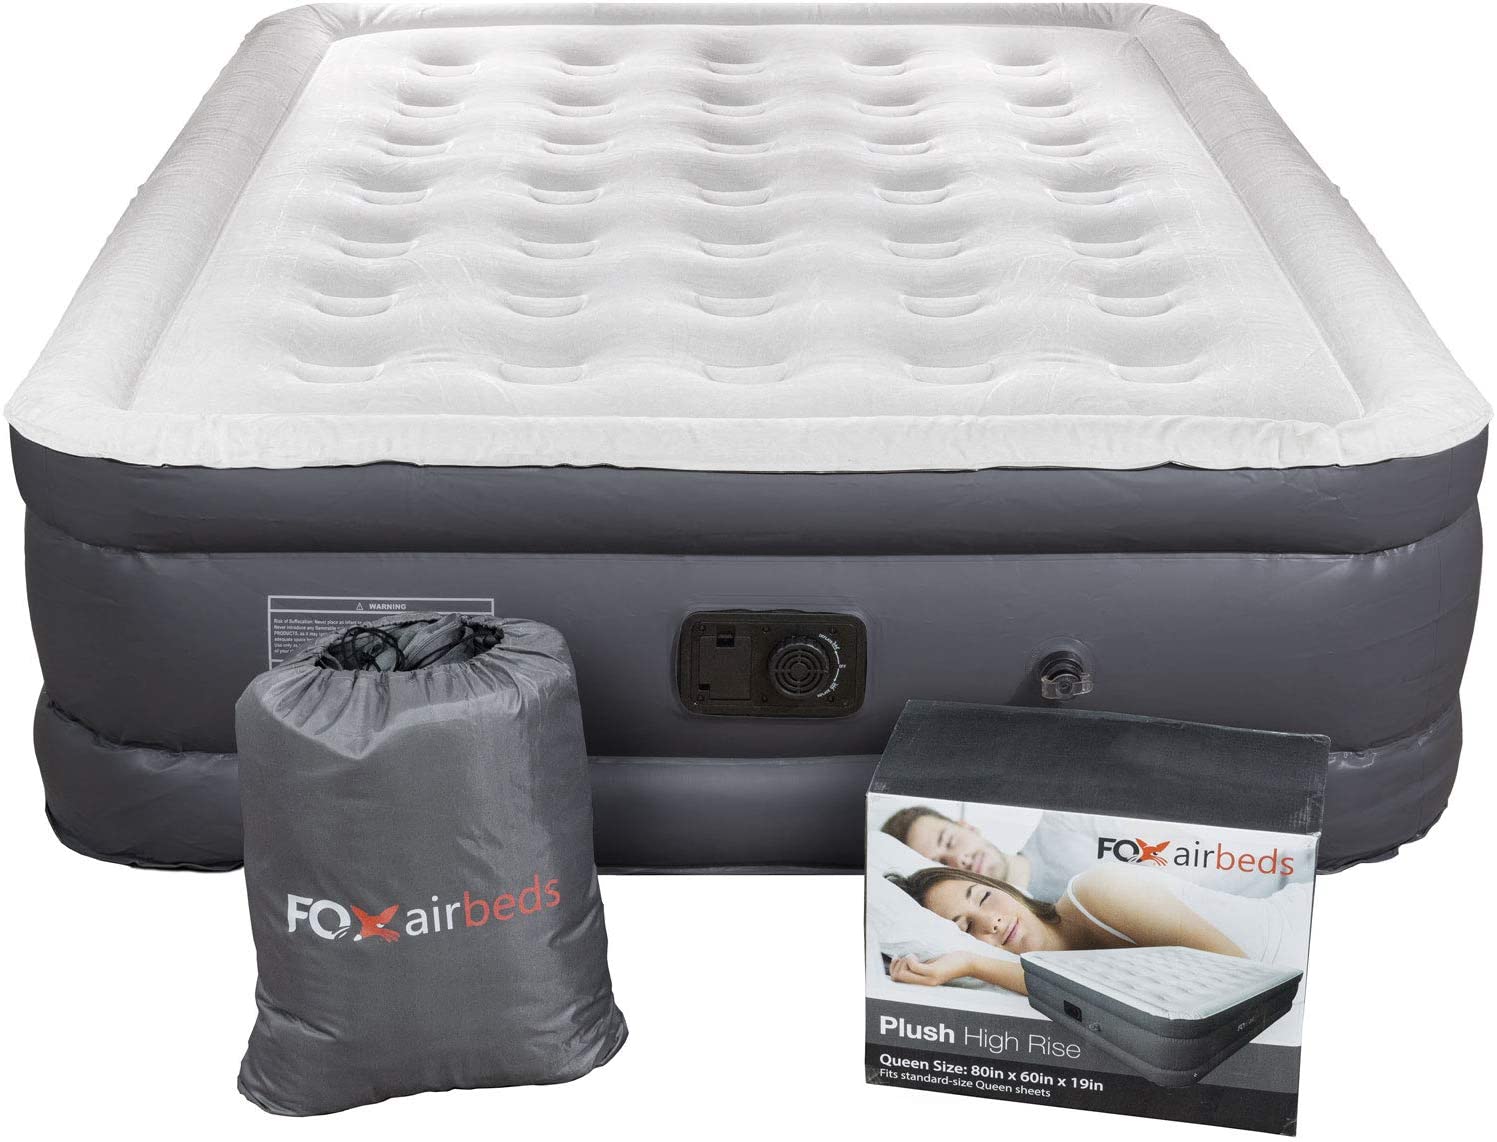 airexpect air mattress reviews